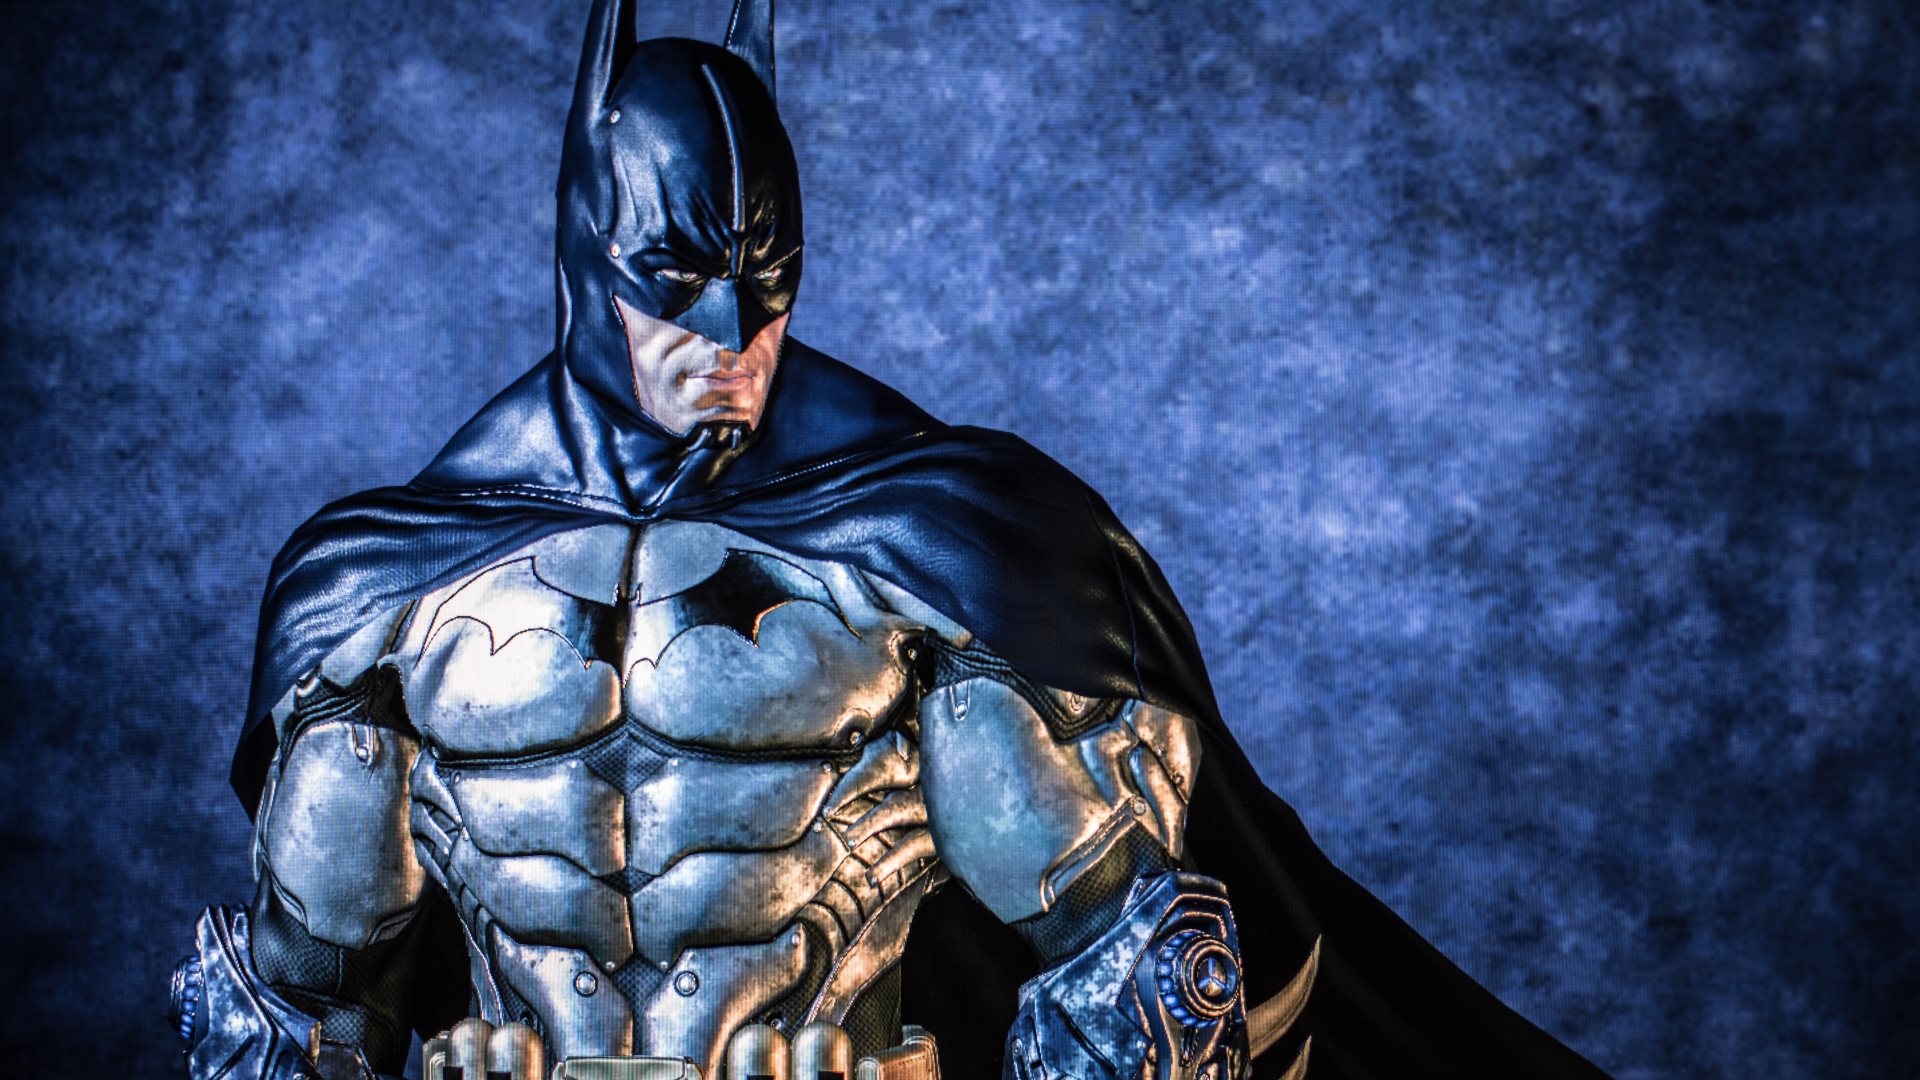 wallpapers de batman,batman,superhero,fictional character,justice league,hero